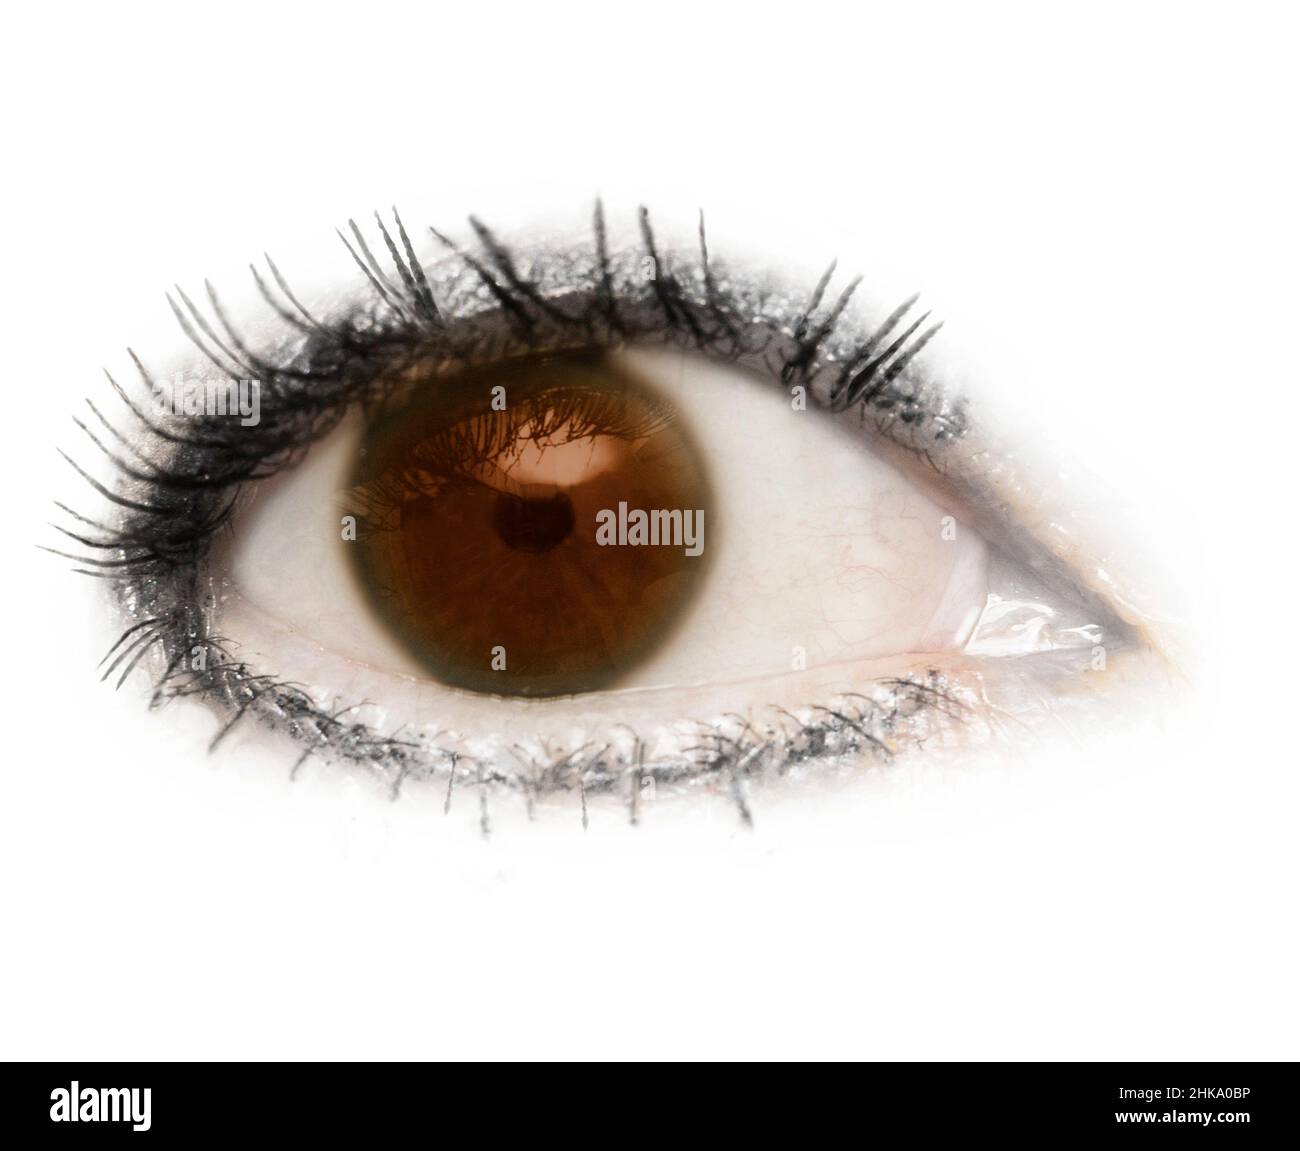 An eye, eyeball, brown, brown eyes, isolated with lashes eyelashes on a white background. Eyelid,pupil,sclera,iris. Stock Photo